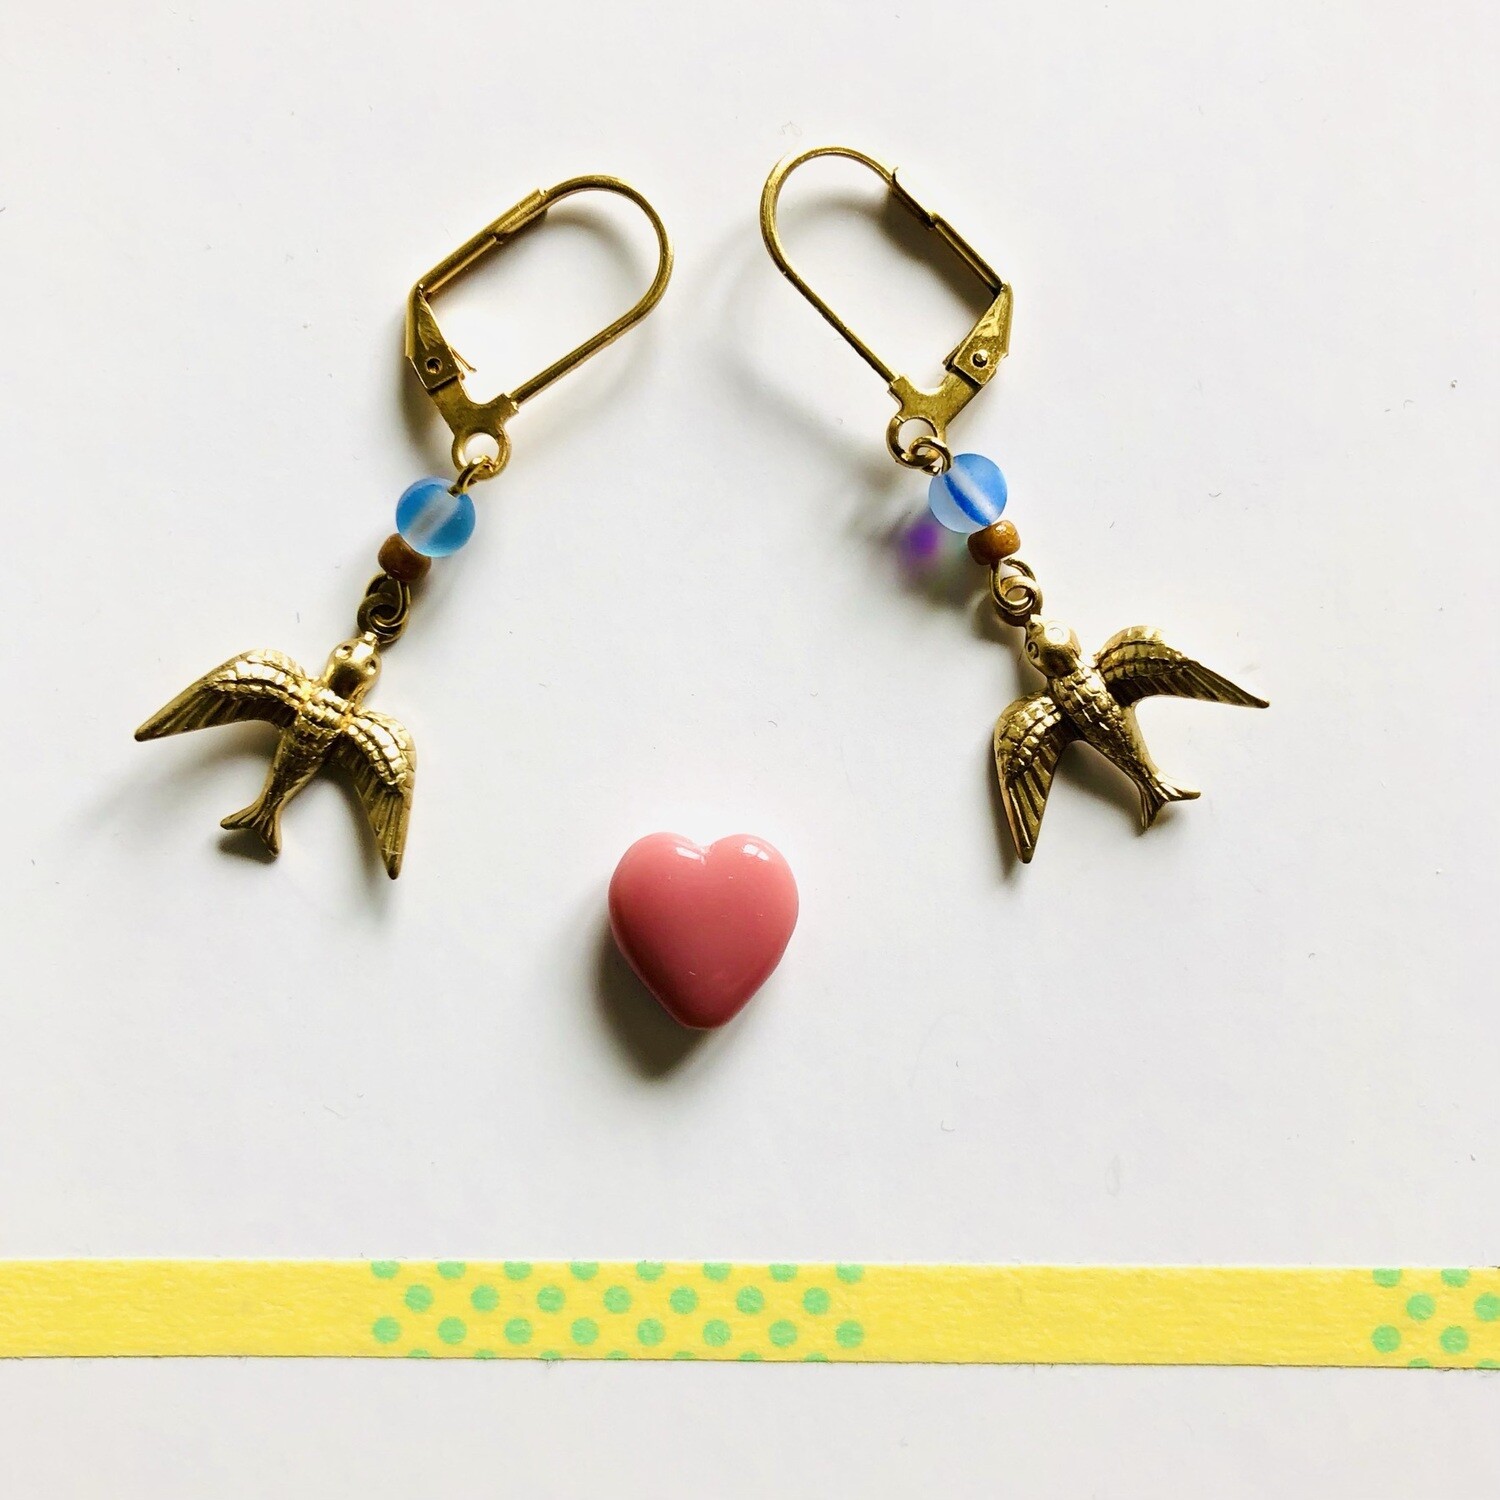 Kahlo blue birds  earrings